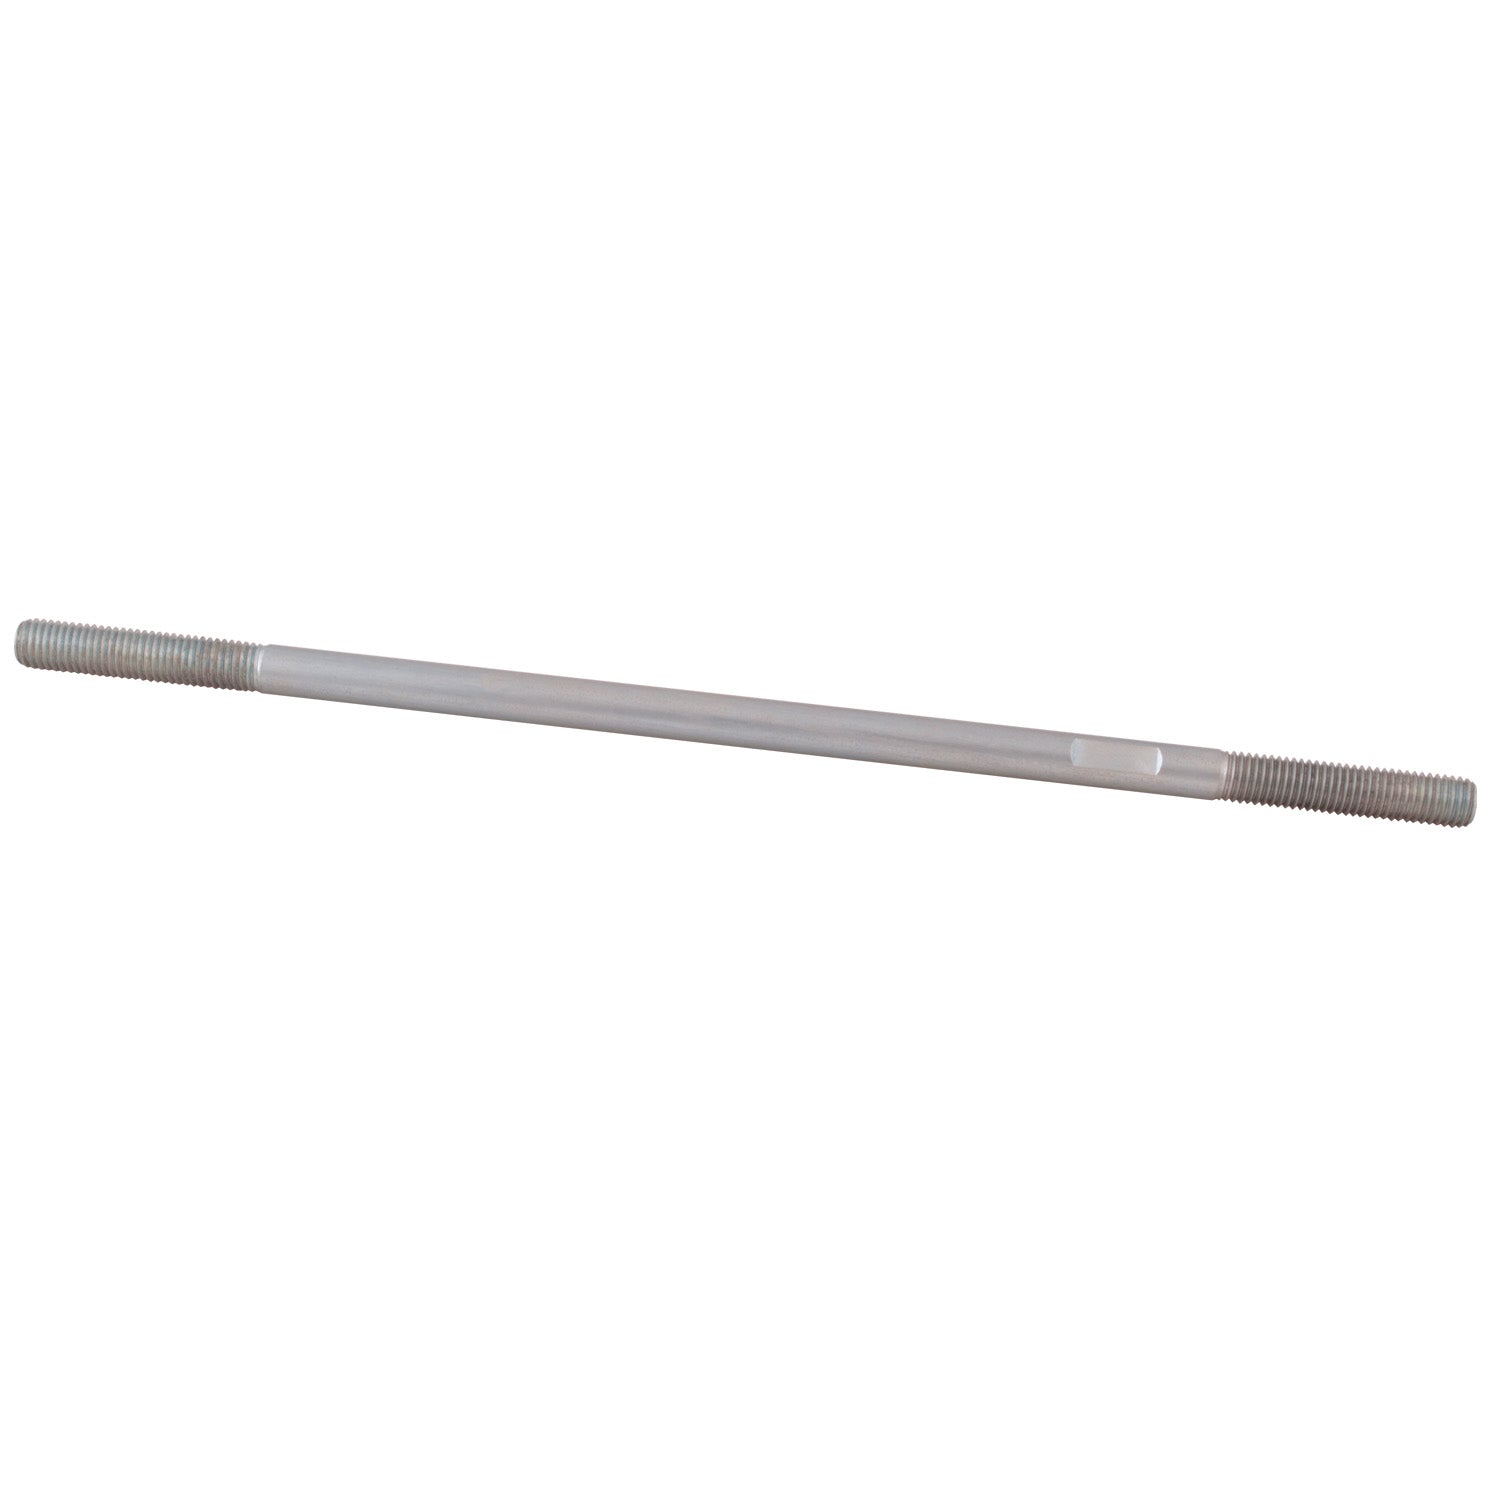 QA1 1698-118 Linkage Rod, Carbon Steel 3/8-24 - 3/8-24 X 9 inch Long